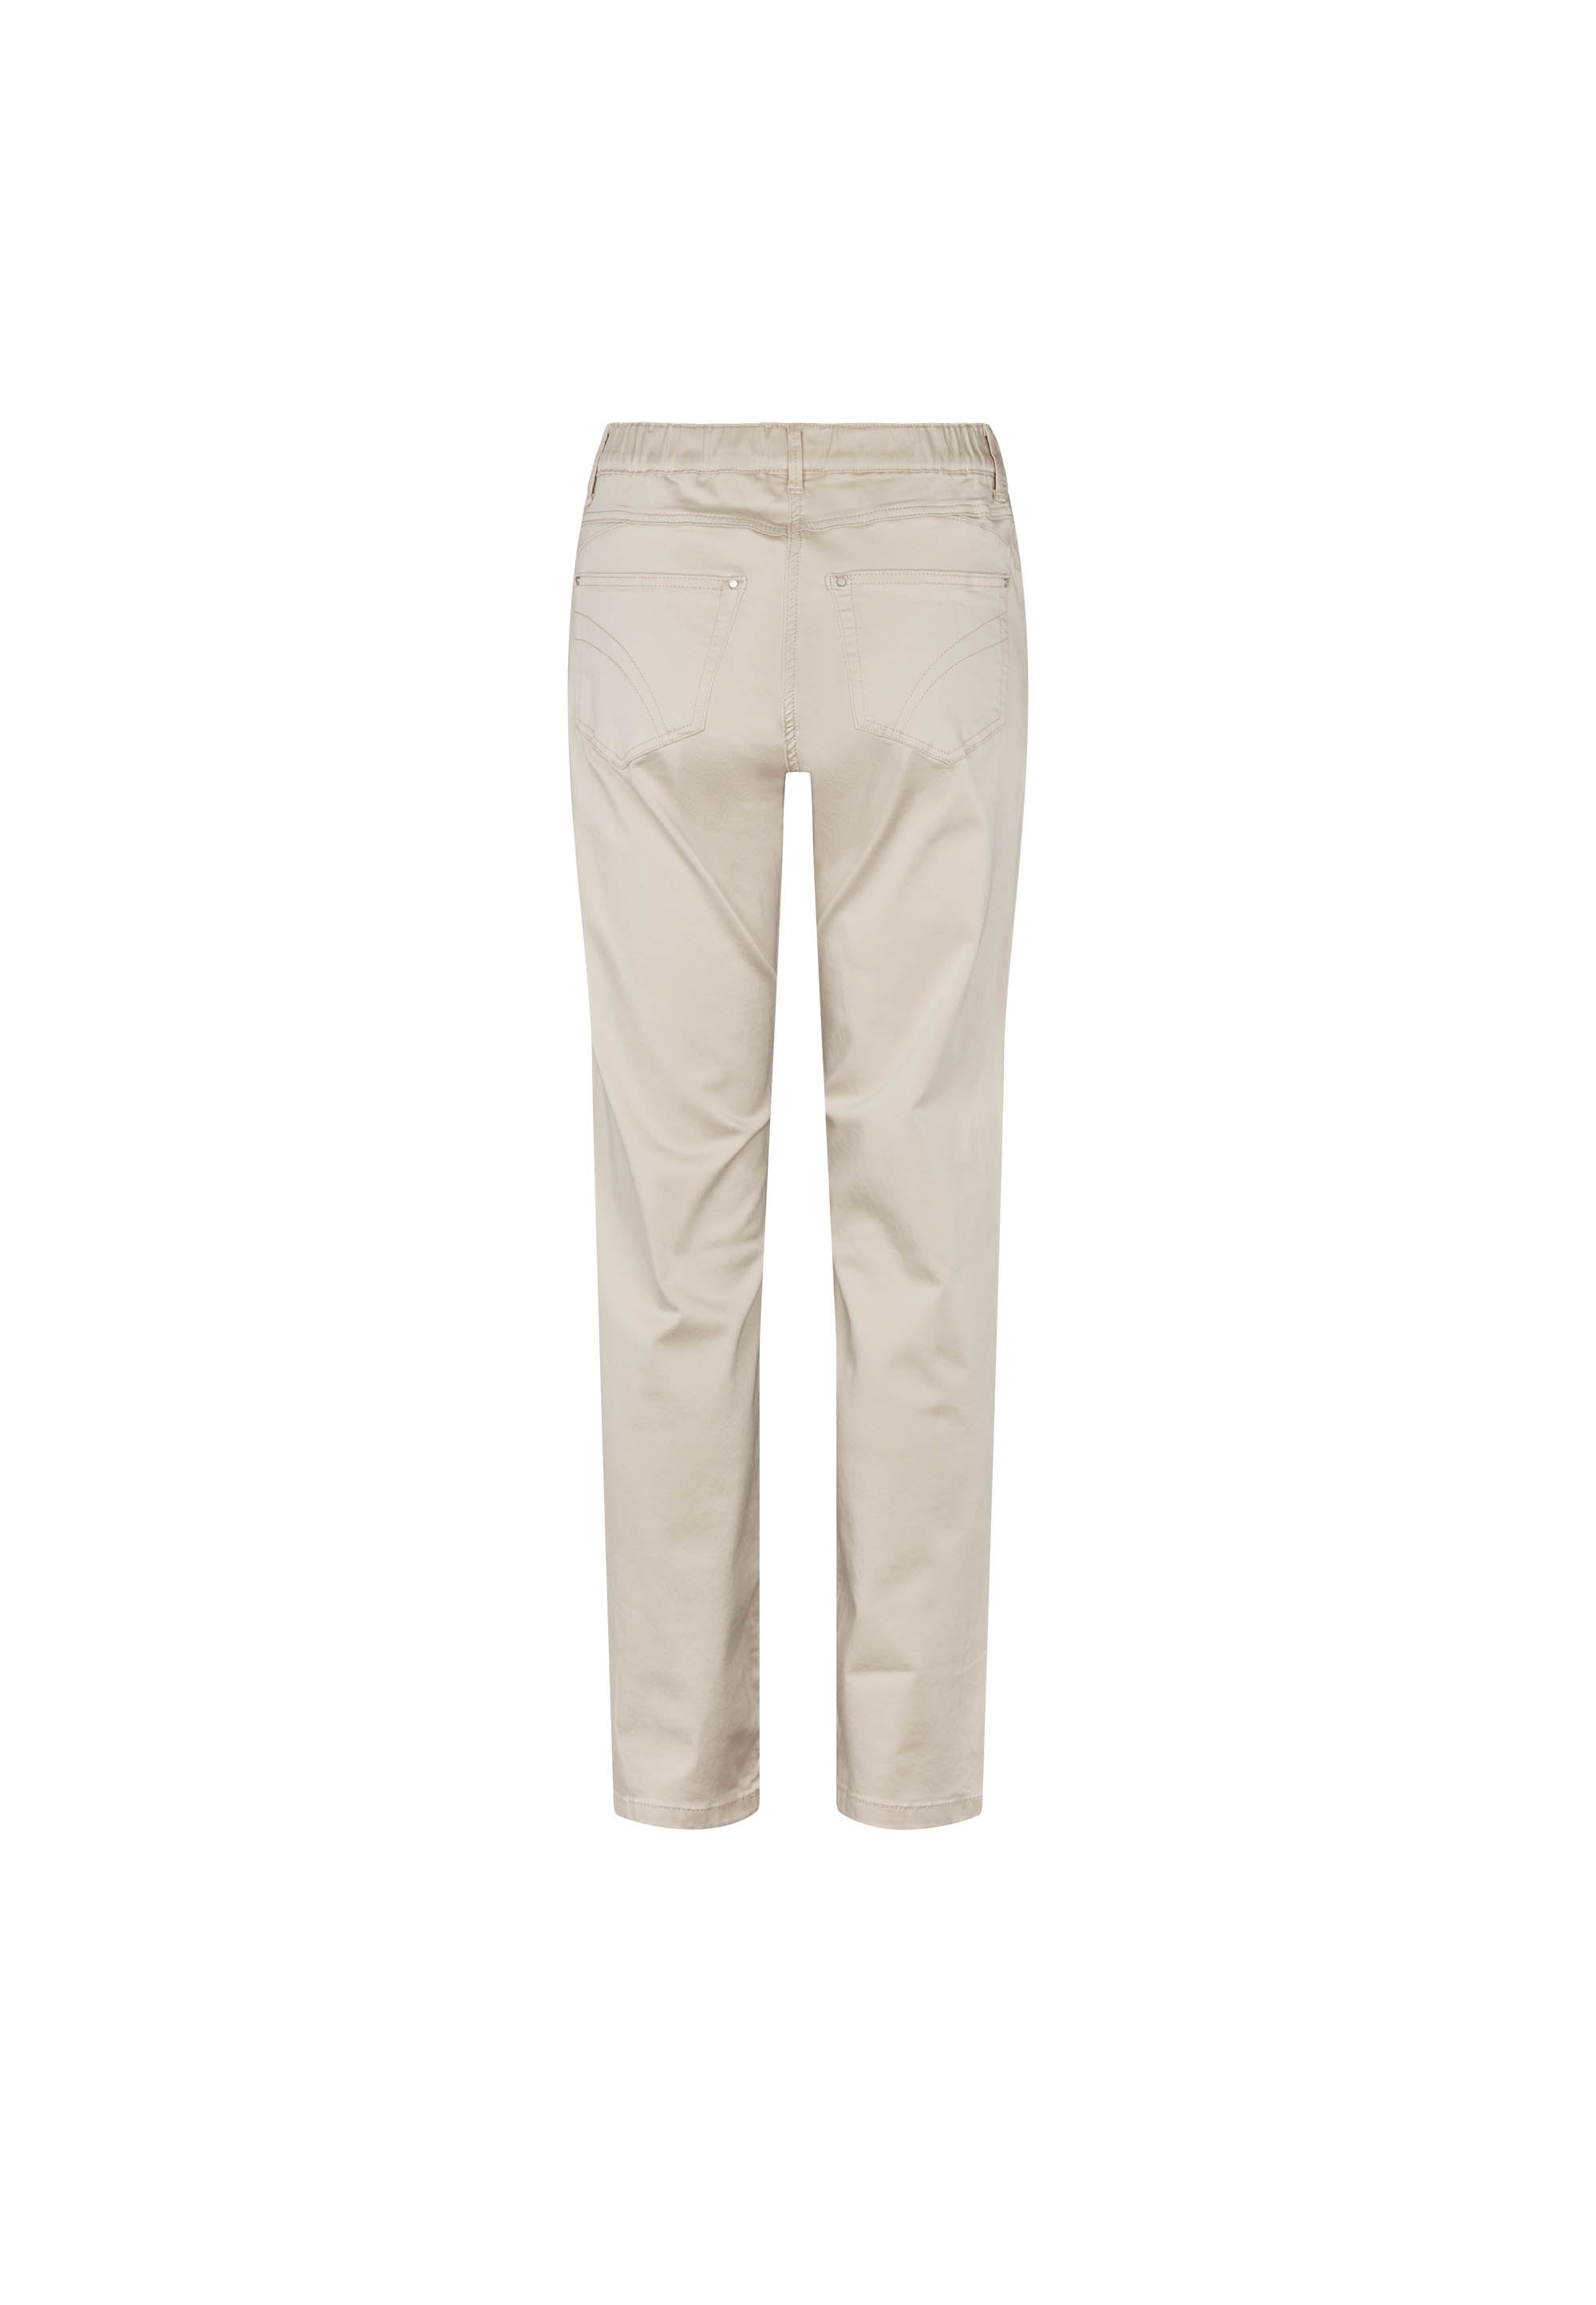 LAURIE Hannah Regular - Medium Length Trousers REGULAR 25102 Grey Sand